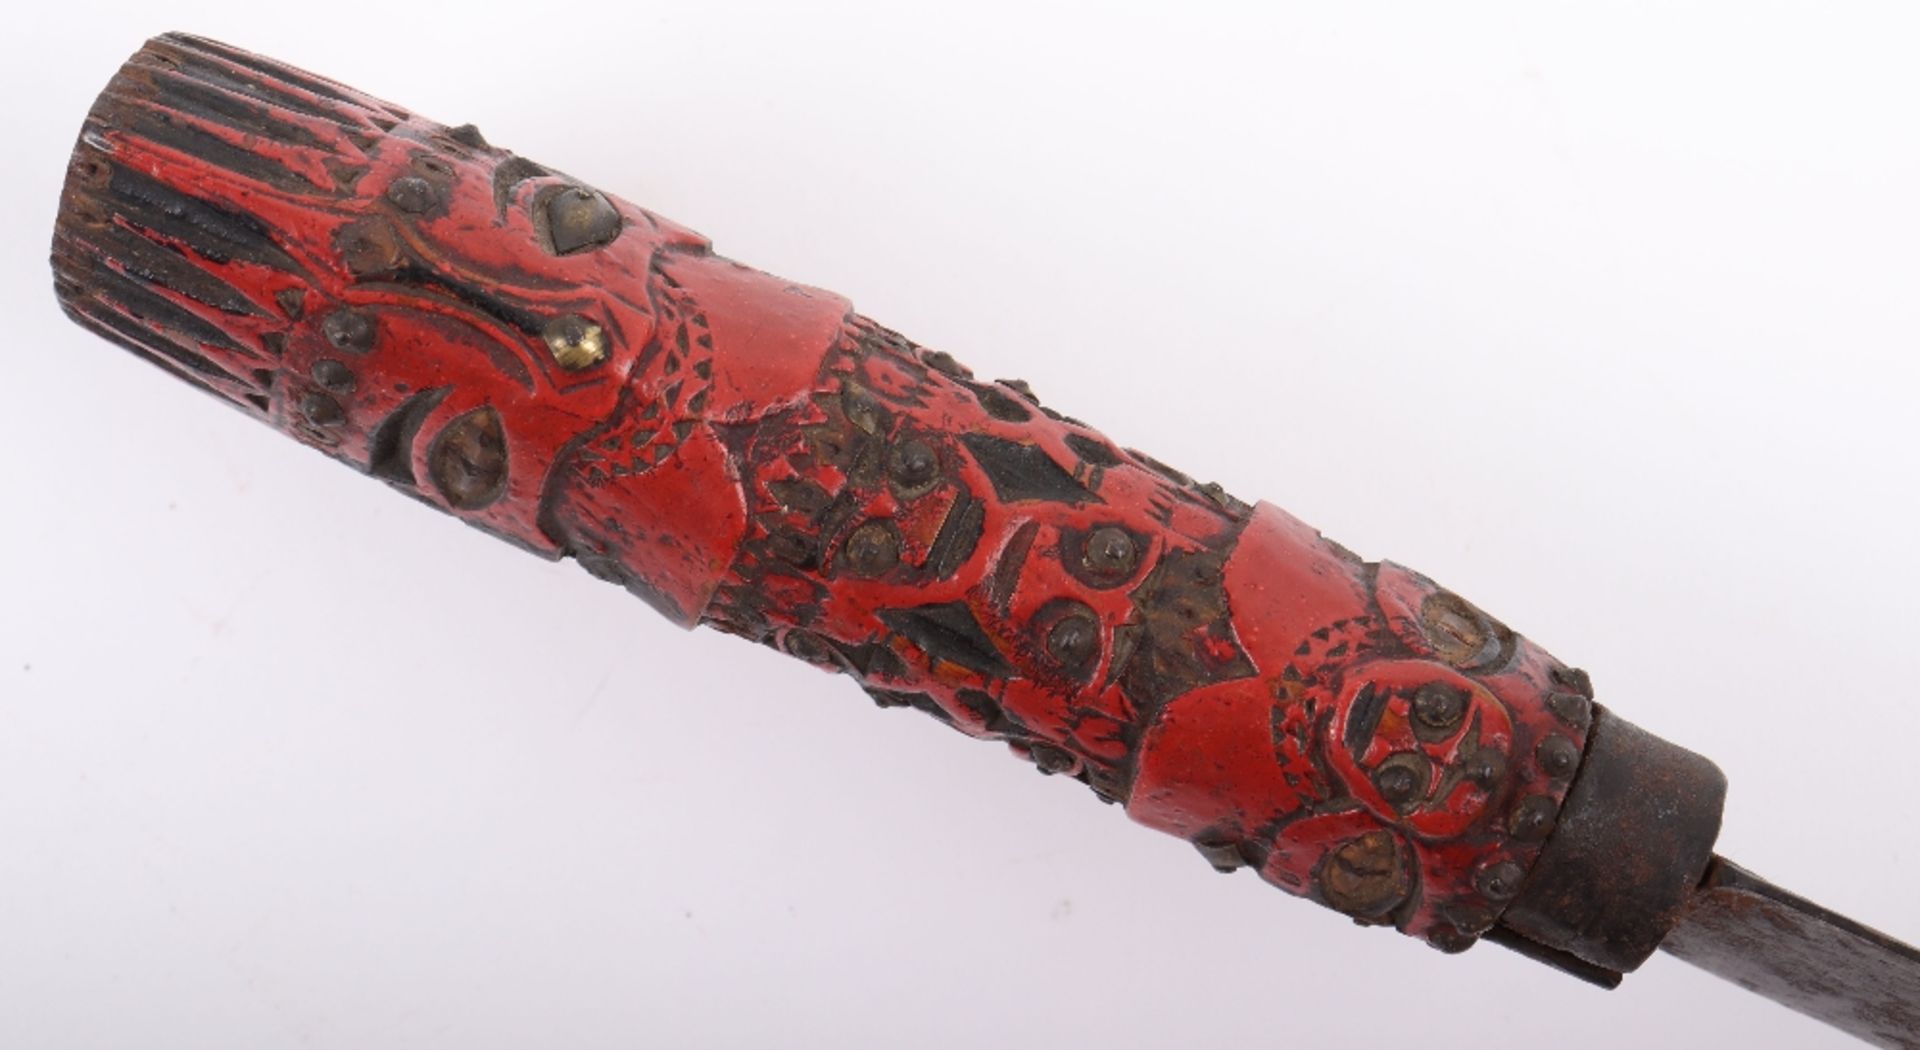 Rare Formosan (Taiwanese) Head Hunters Sword of the Paiwan, 19th Century - Image 7 of 12